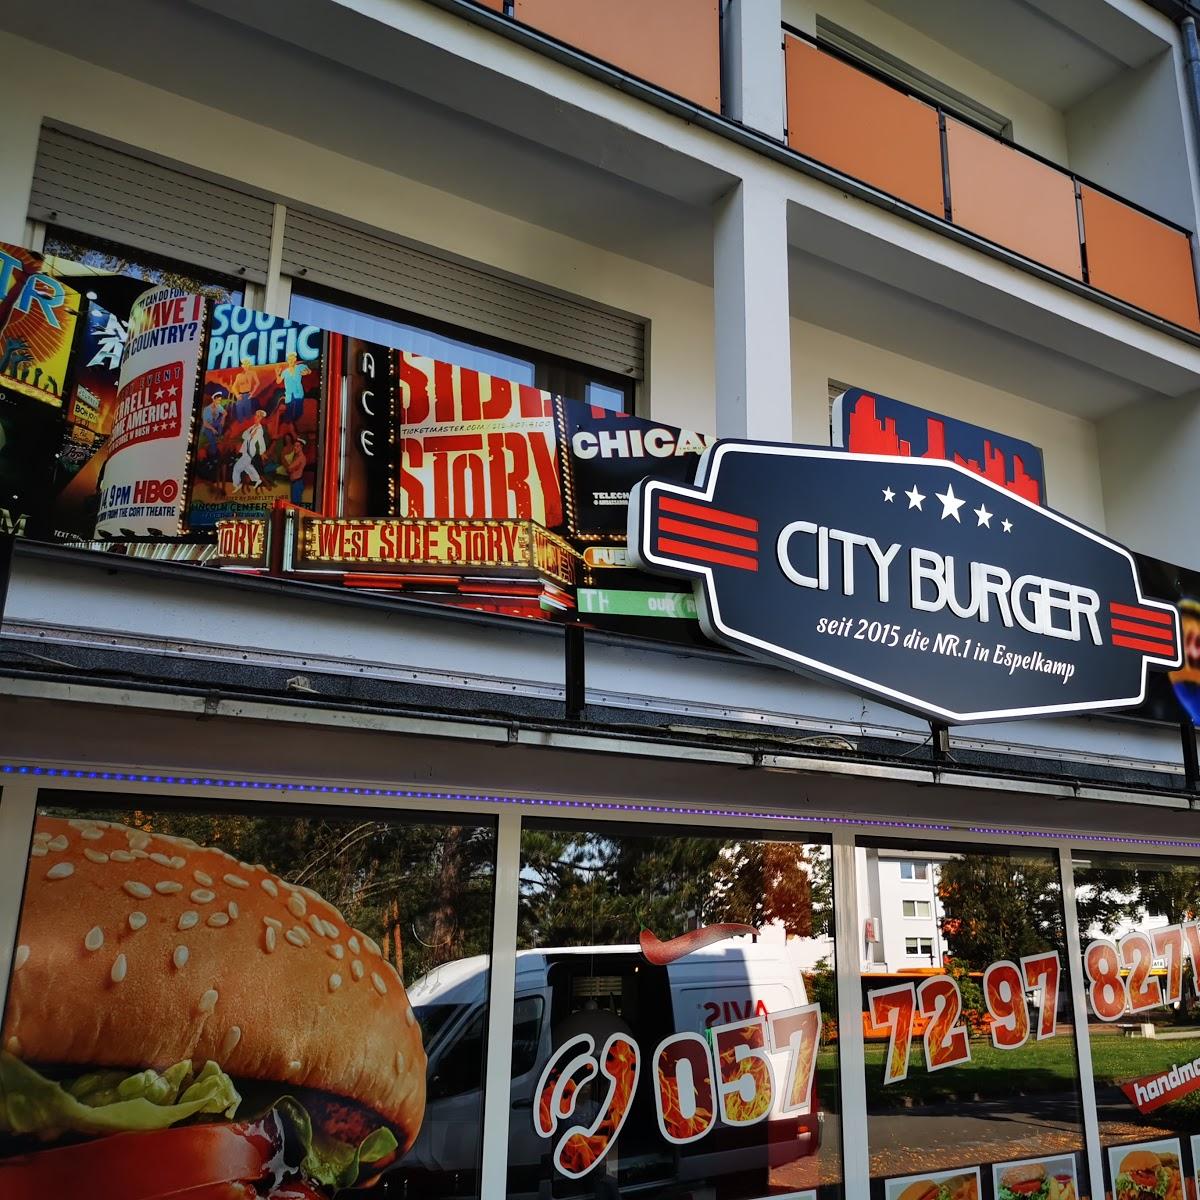 Restaurant "City Burger" in  Espelkamp